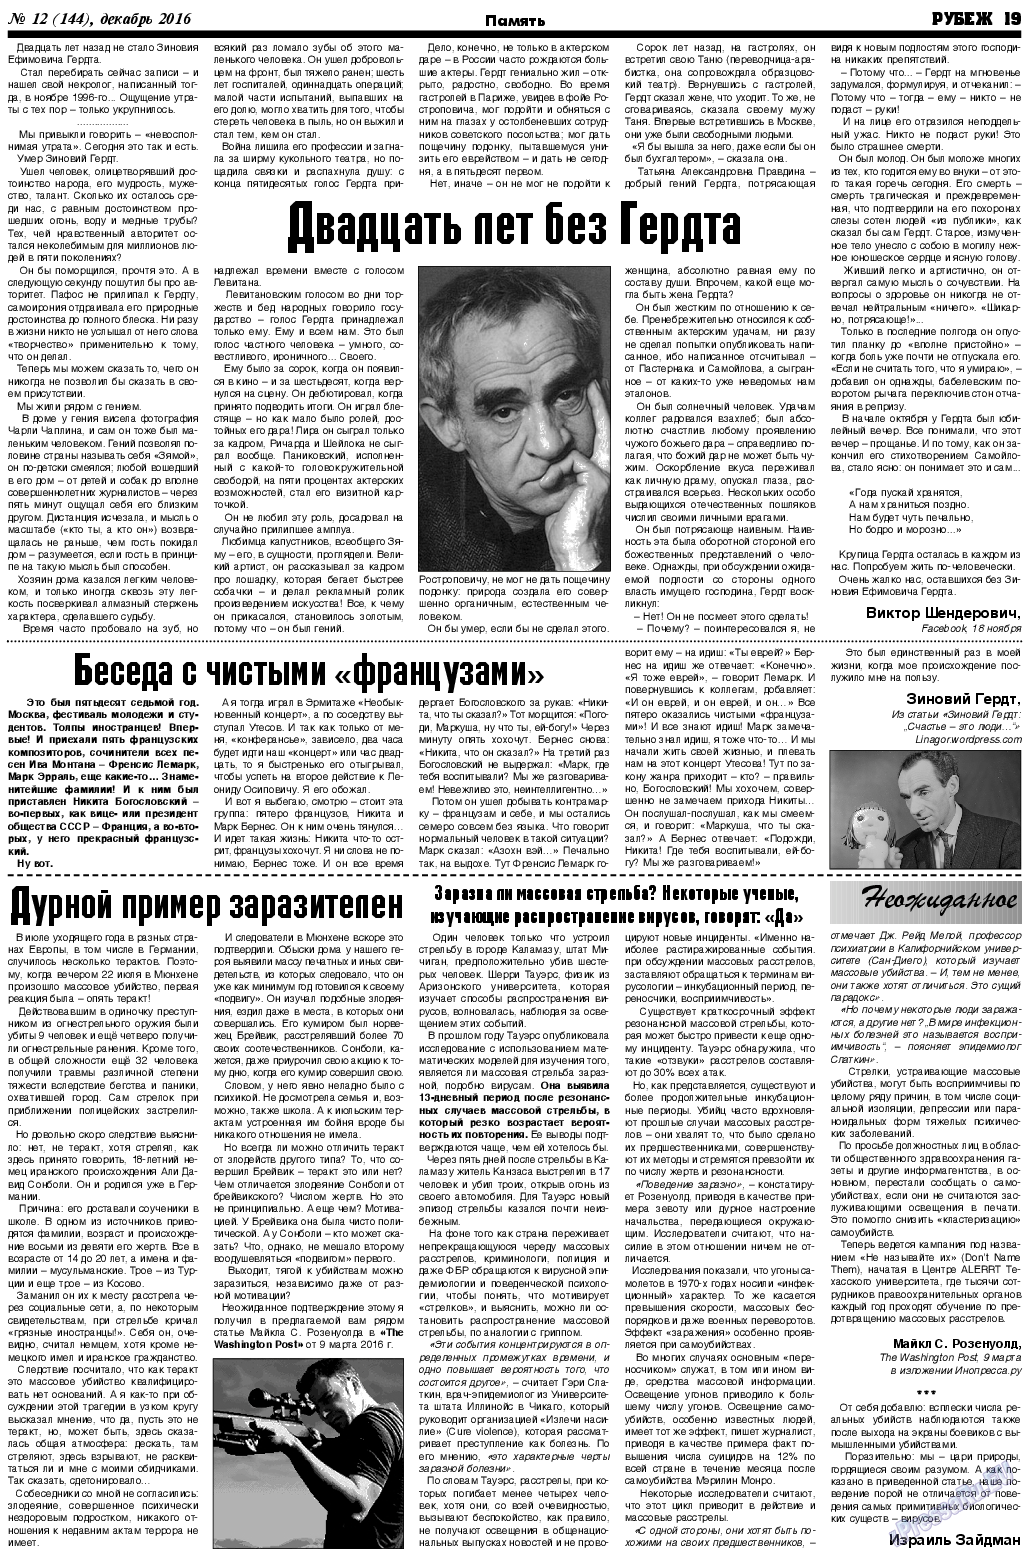 Рубеж, газета. 2016 №12 стр.19